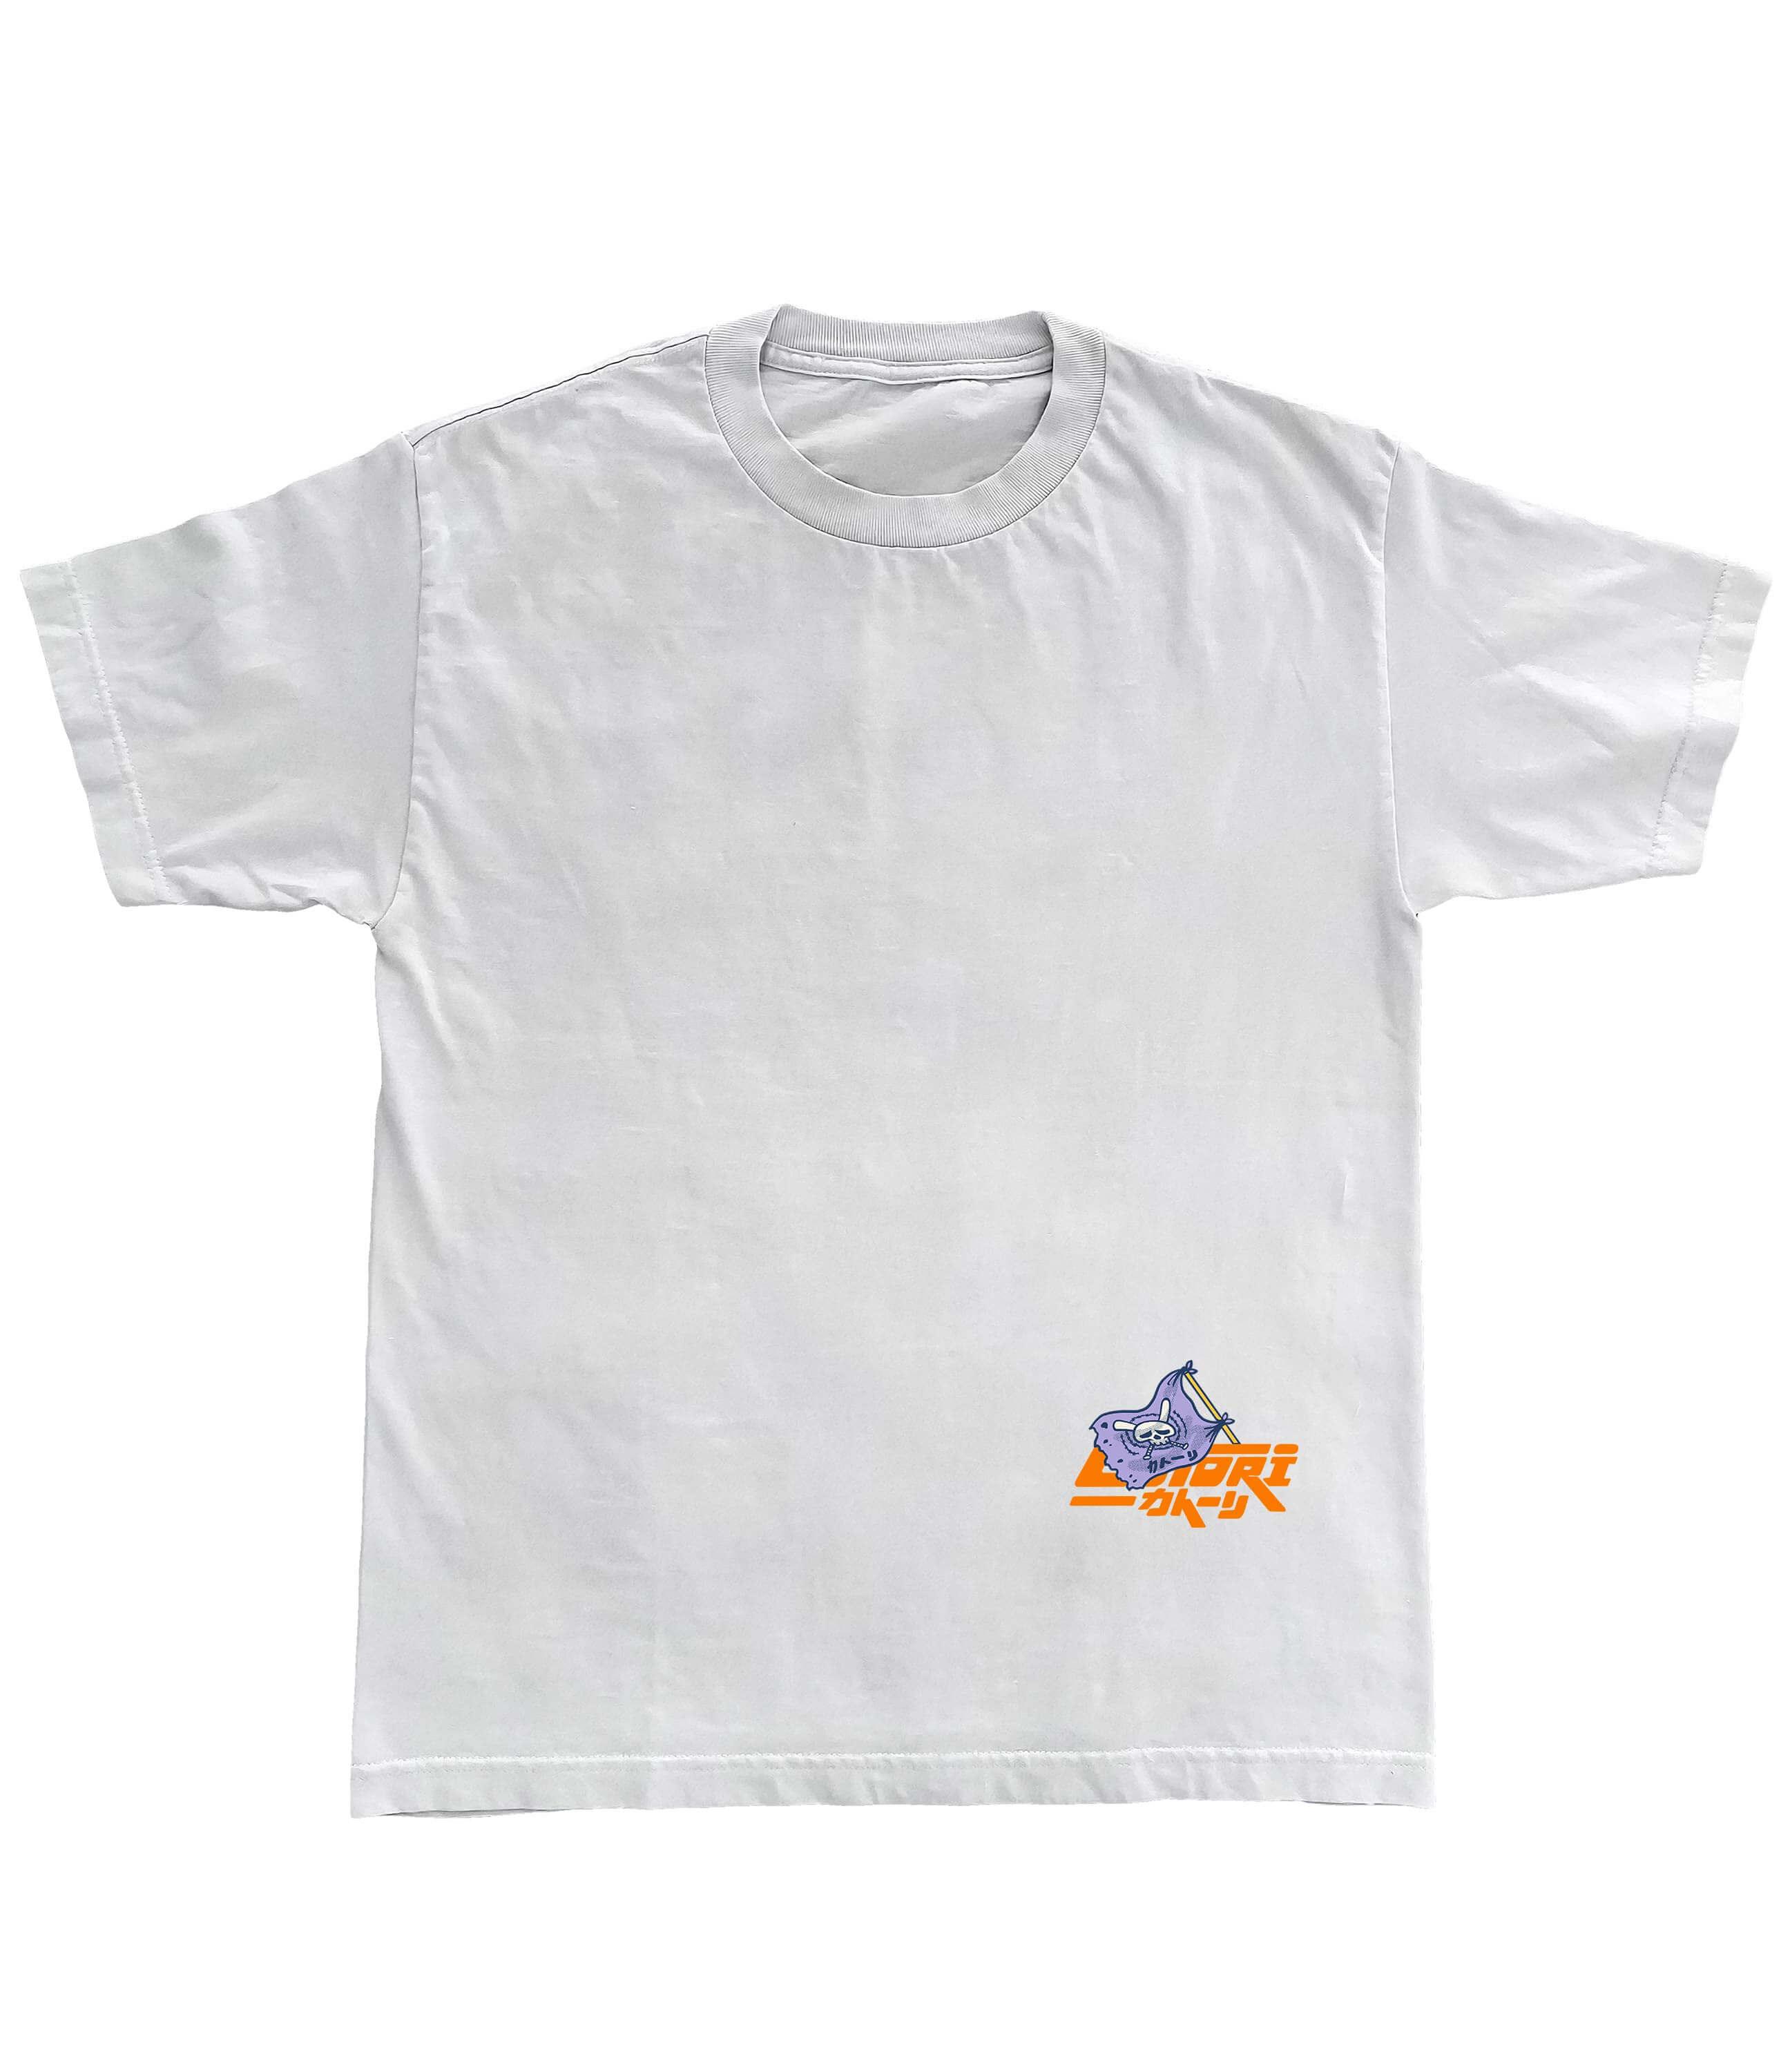 Pirate T-Shirt at Catori Clothing | Graphic & Anime Tees, Hoodies & Sweatshirts 